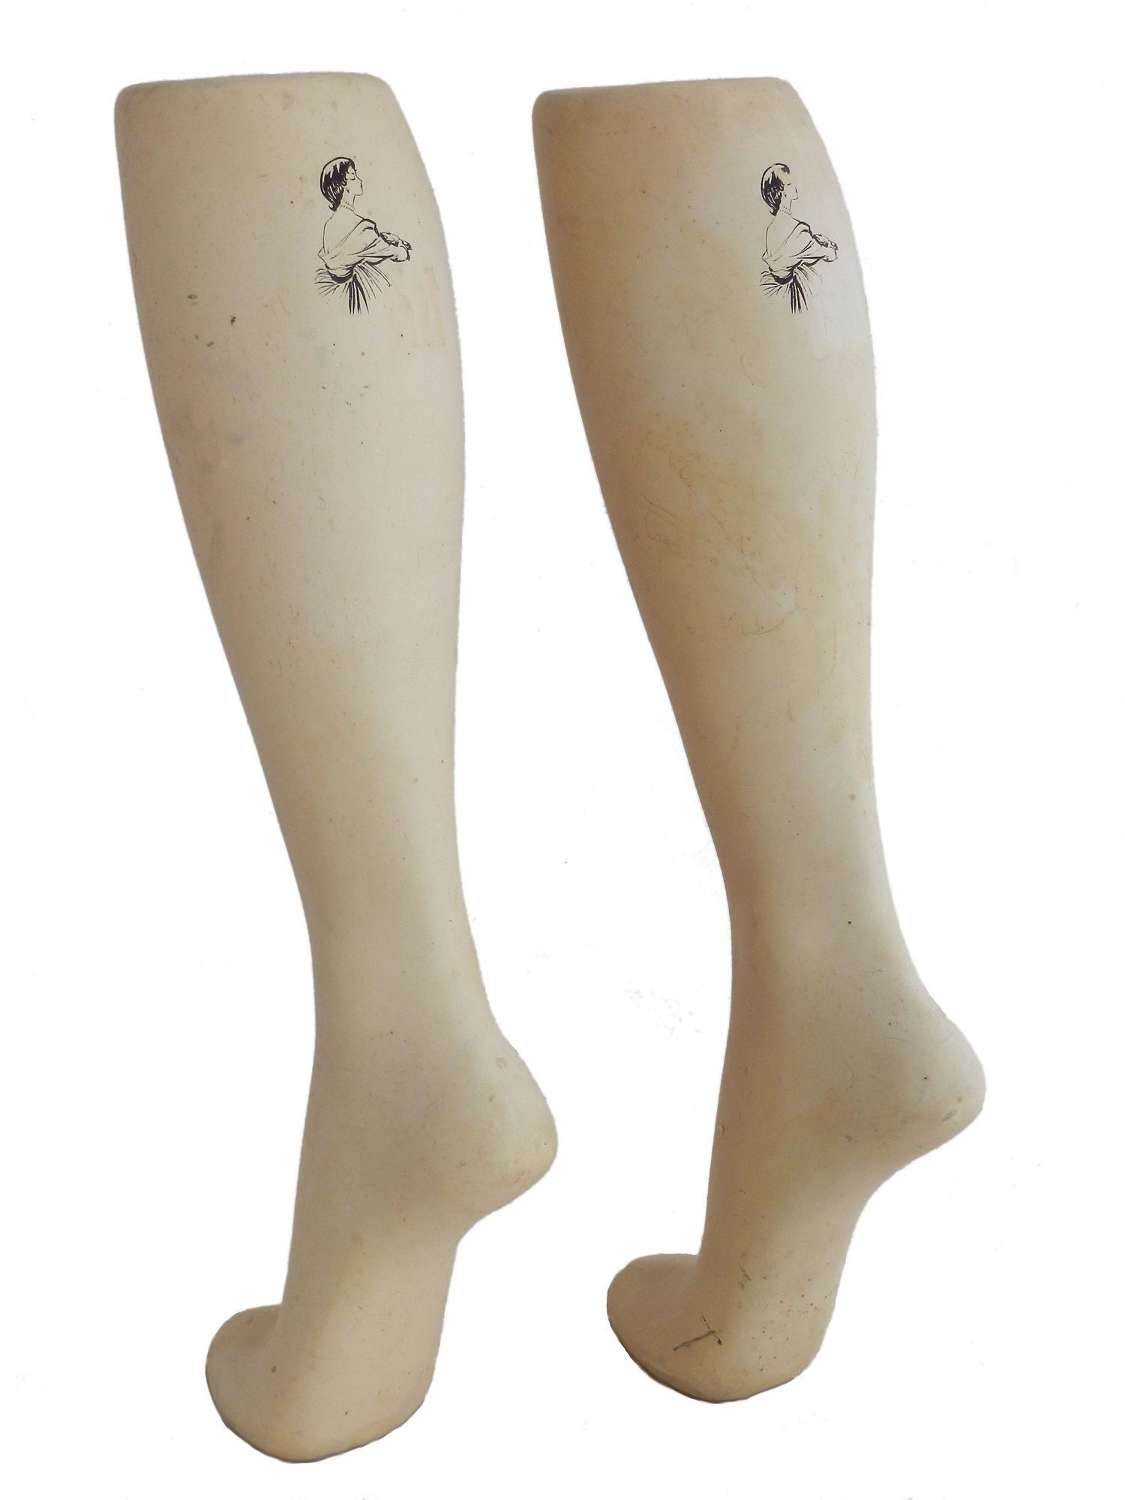 Pair of Legs Advertising Stockings French Midcentury